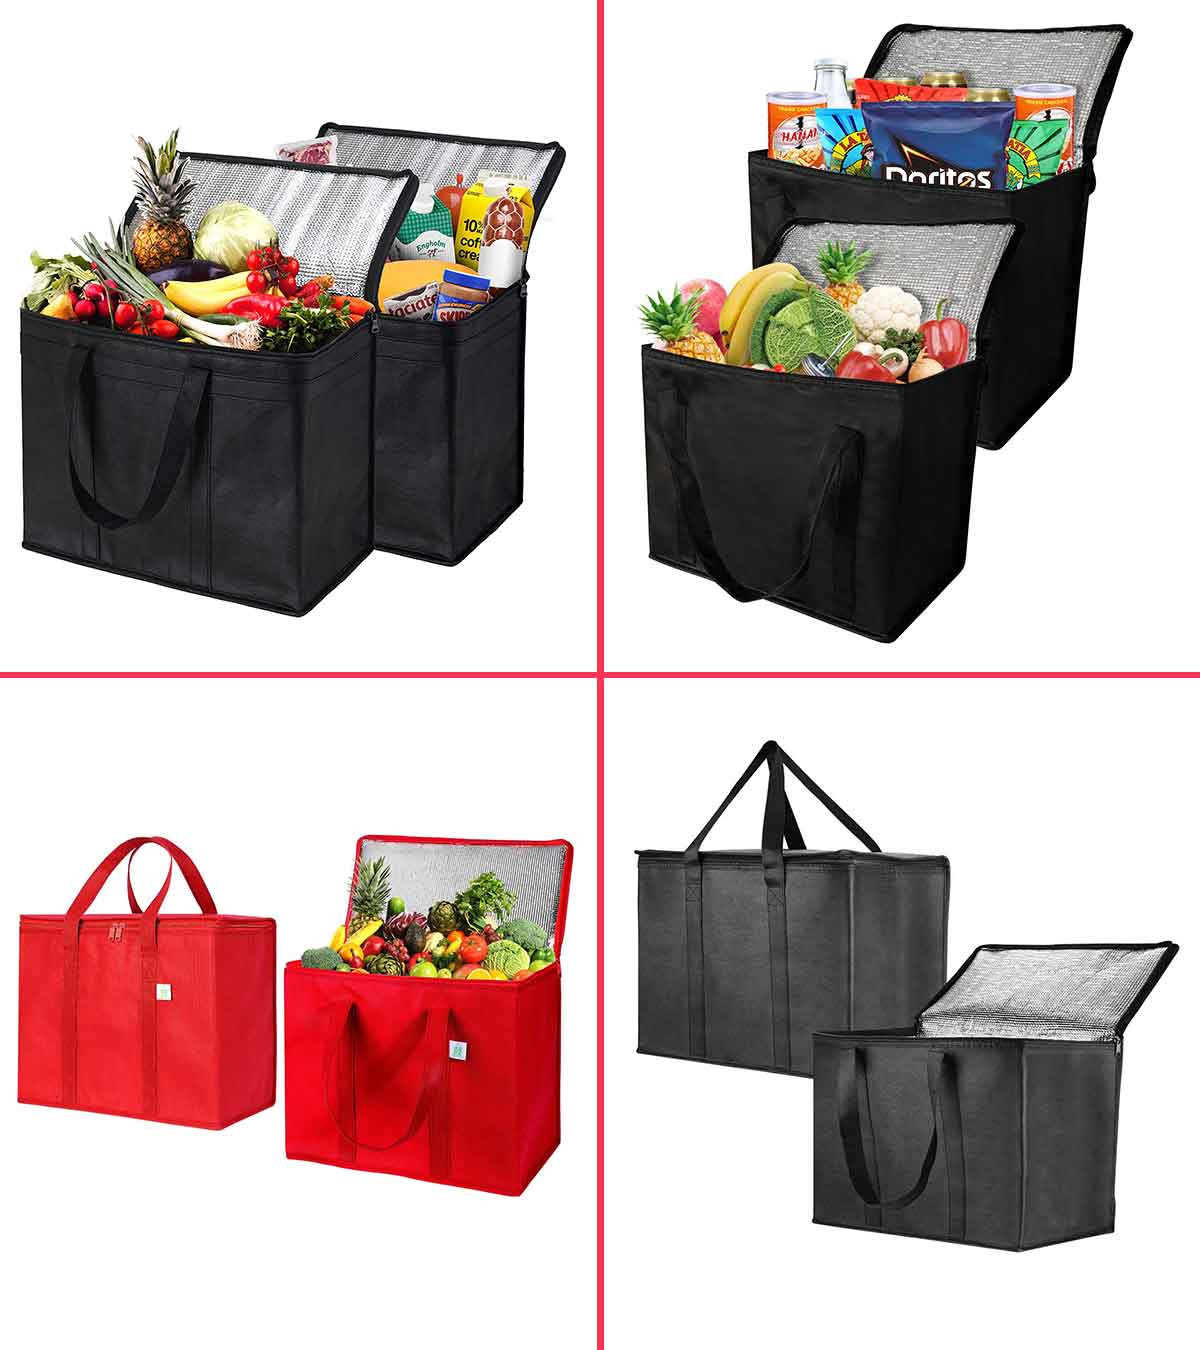 https://www.momjunction.com/wp-content/uploads/2020/08/13-Best-Food-Delivery-Bags-Of-2020.jpg